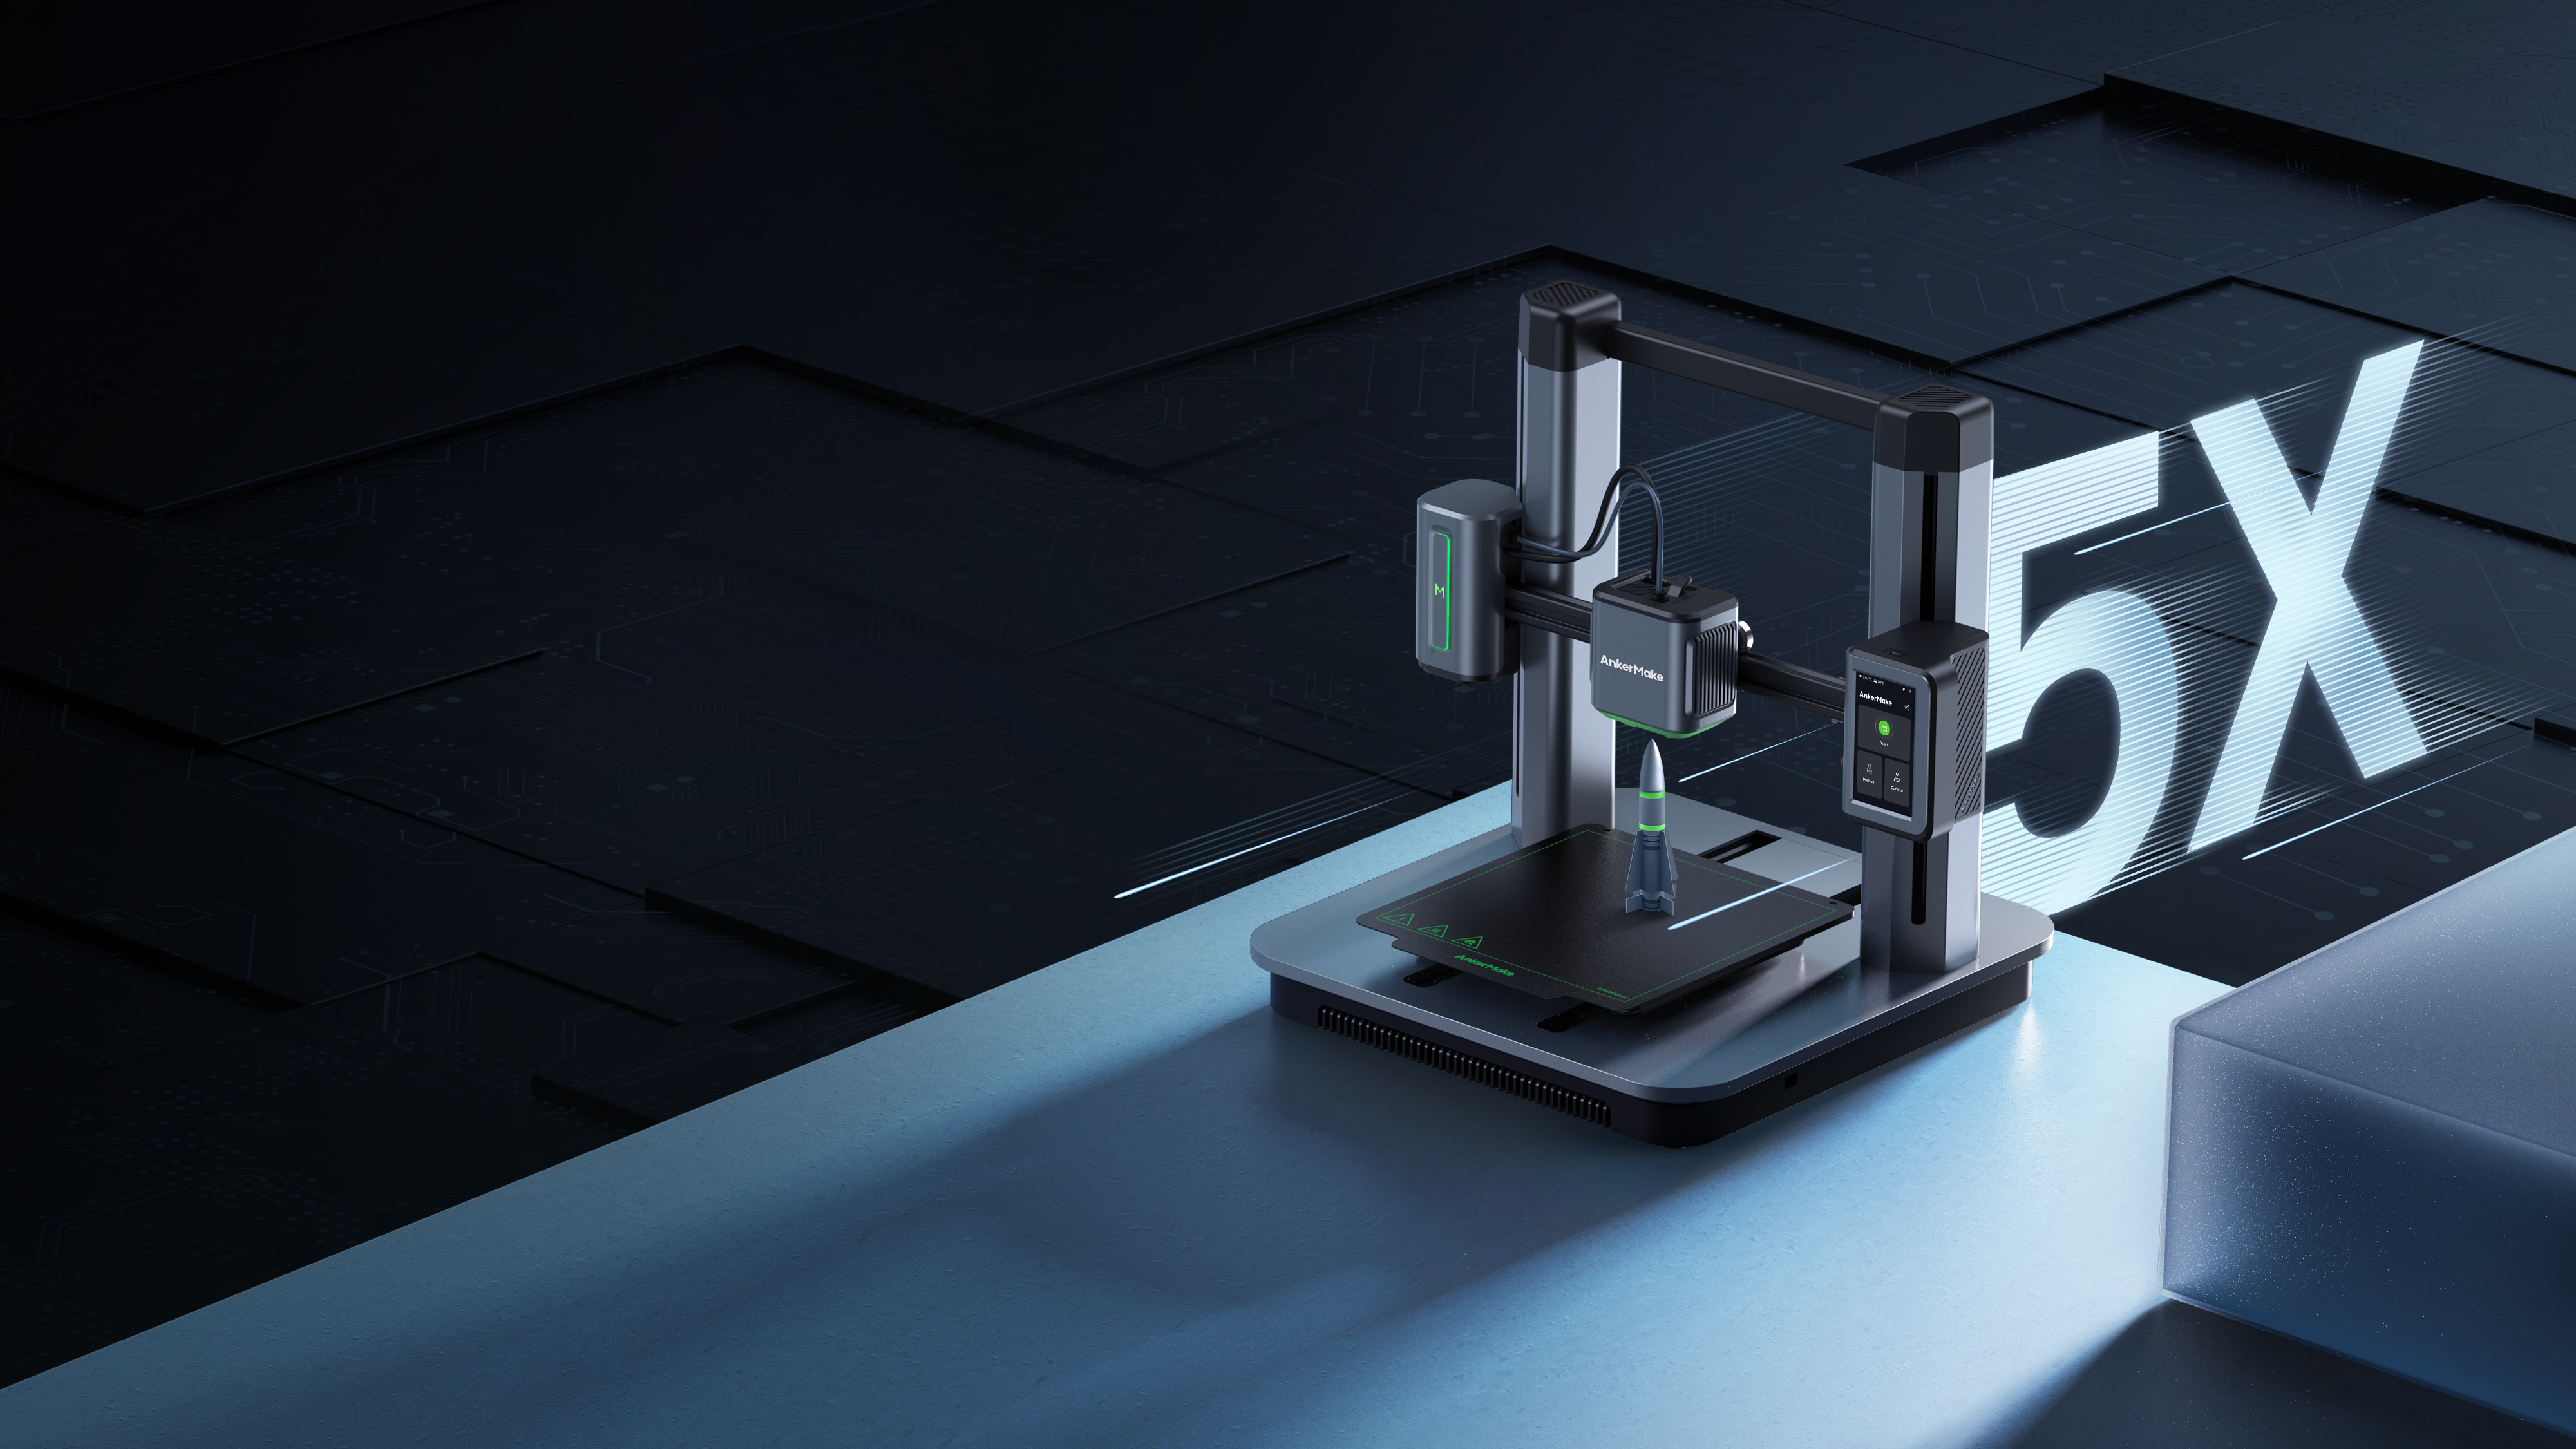 TKSE Stampante 3D piattaforma di stampa 3D, kit stampante 3D